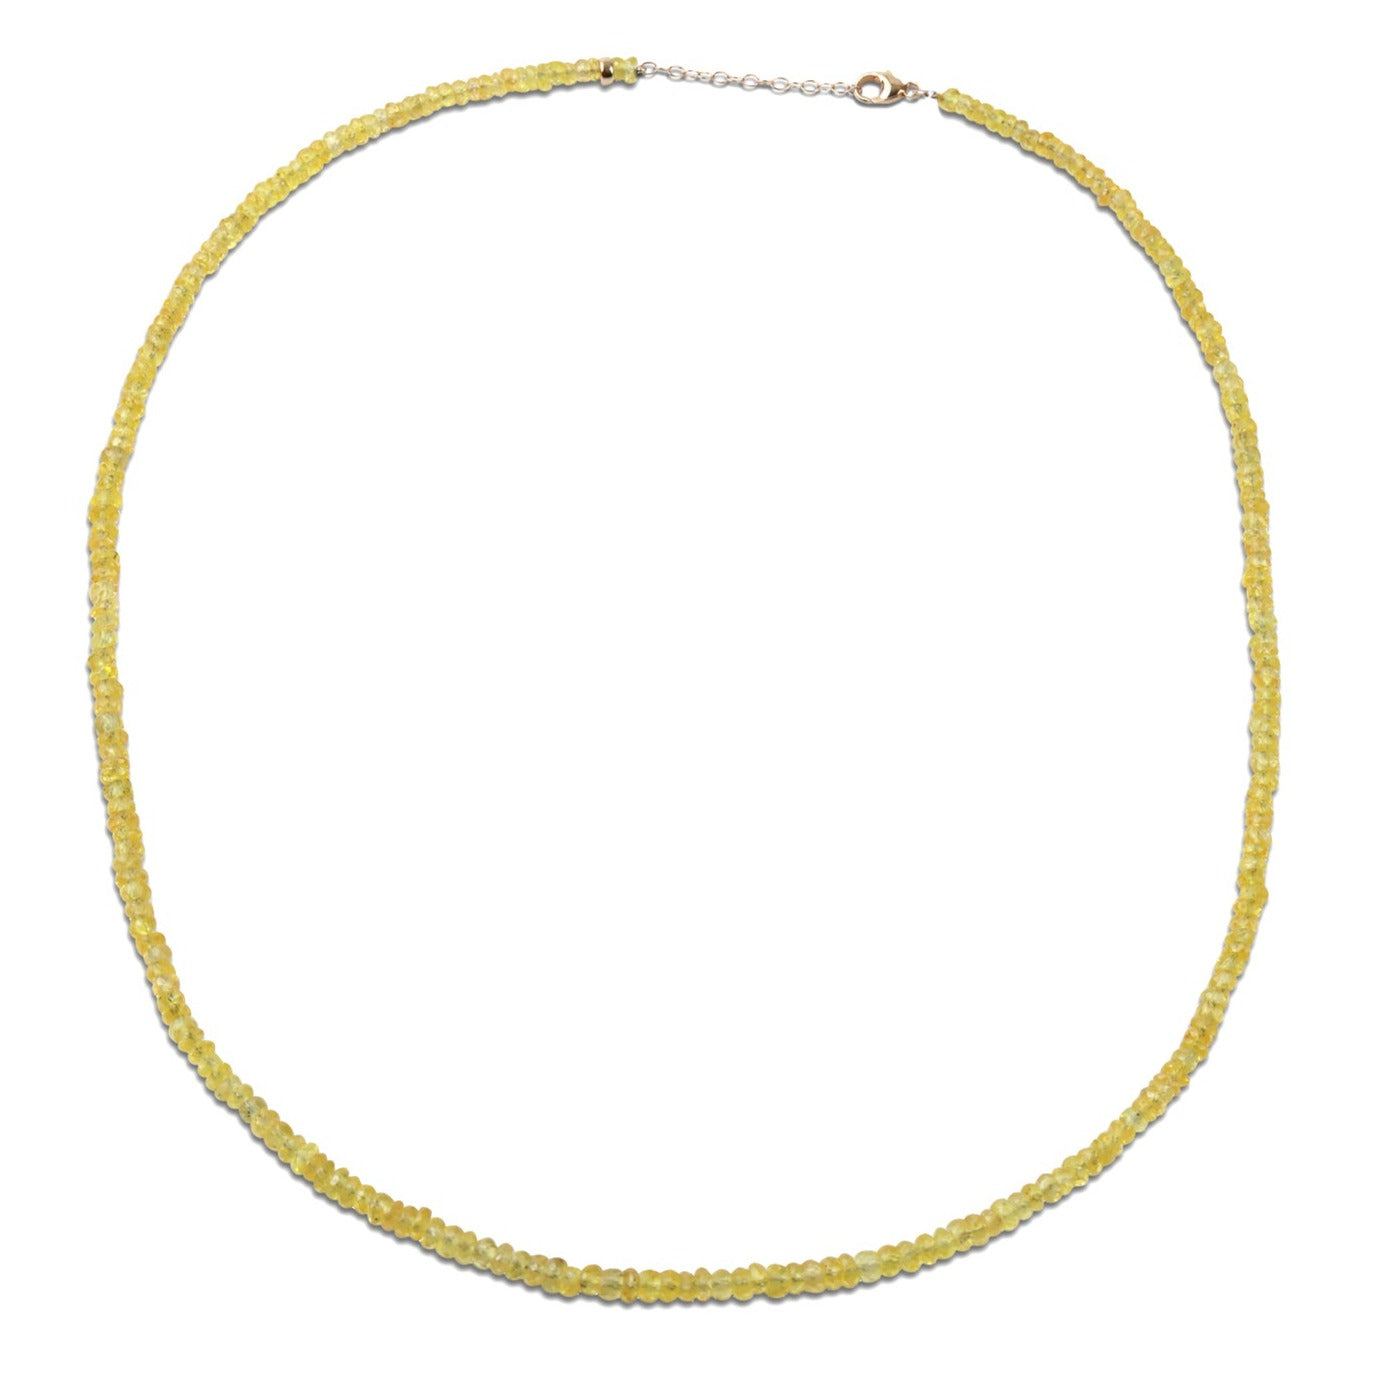 160-70 - 14k White Gold Diamond & Yellow Sapphire Pendant &nda...